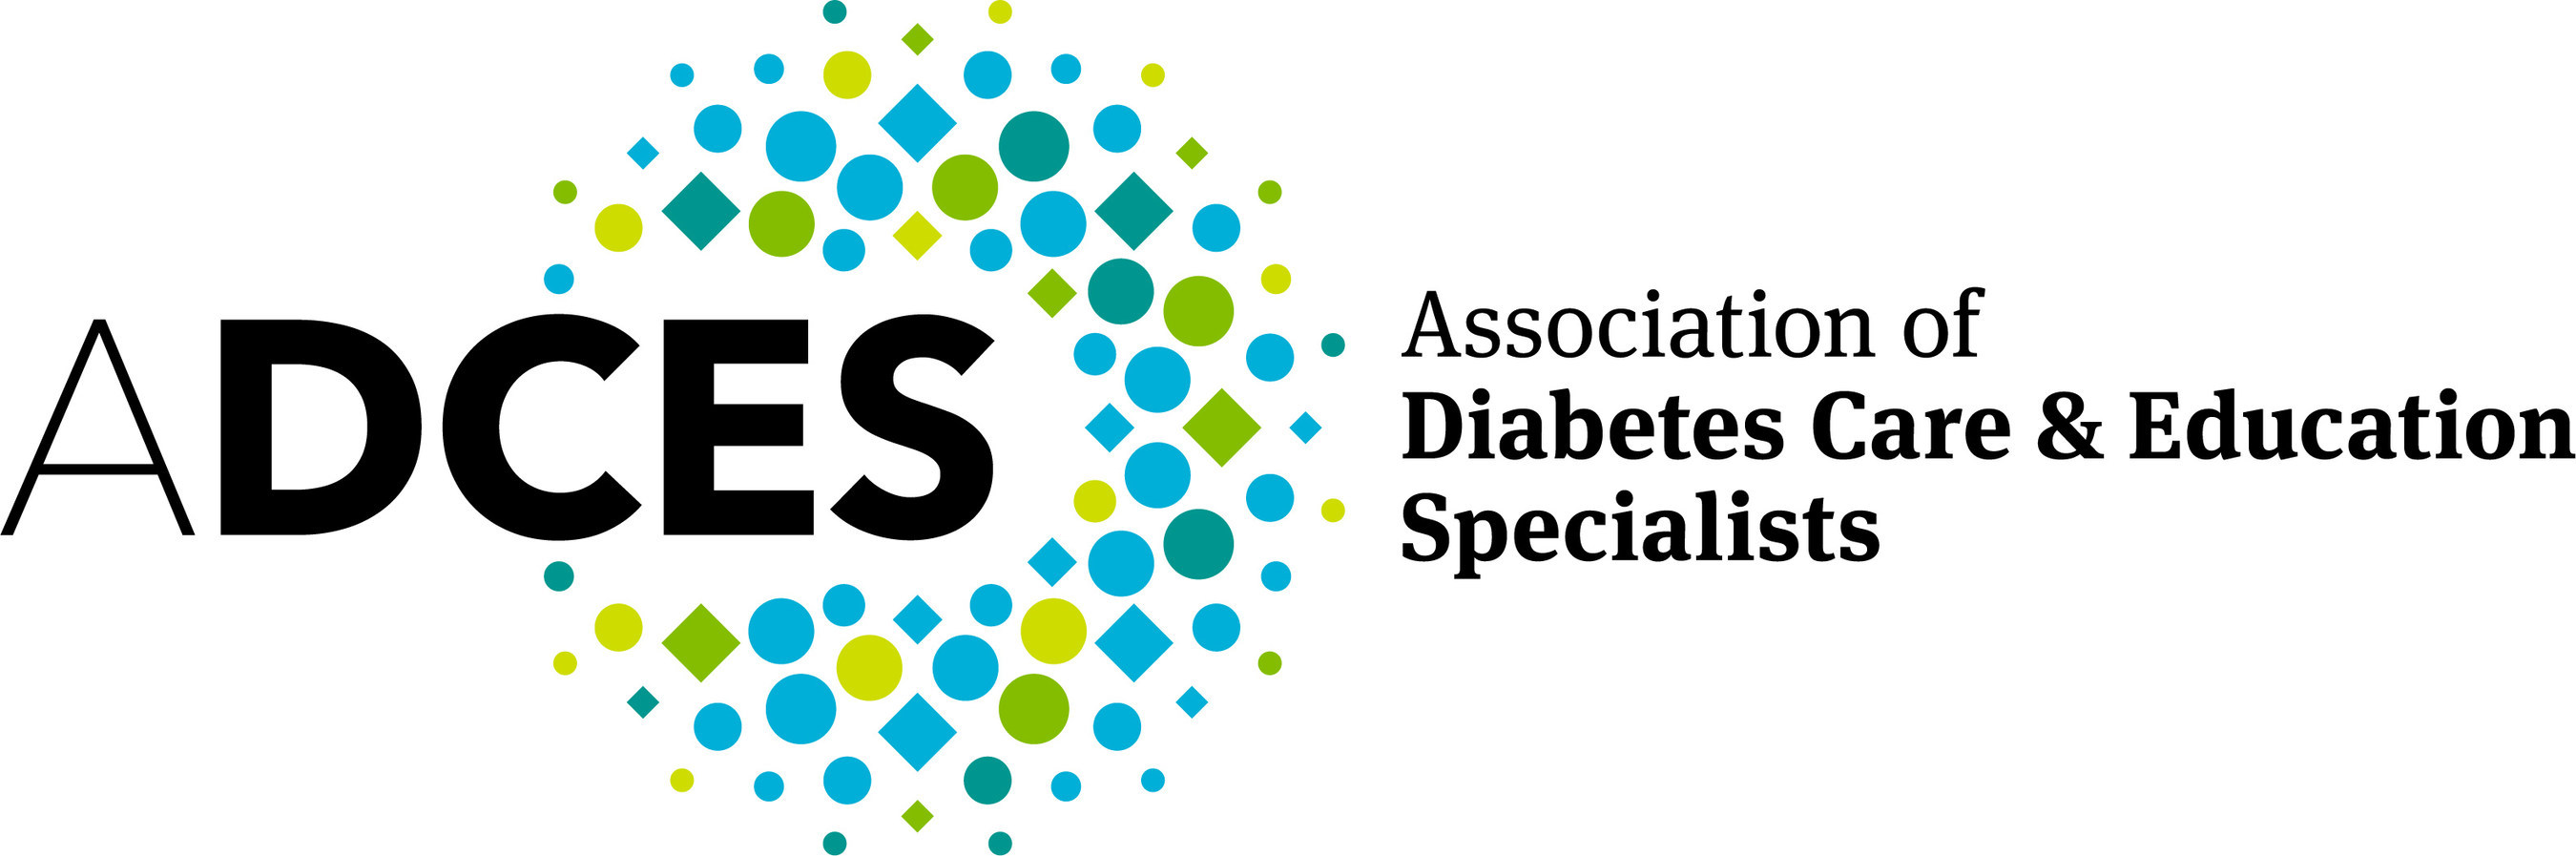 Association of Diabetes Care & Education Specialists